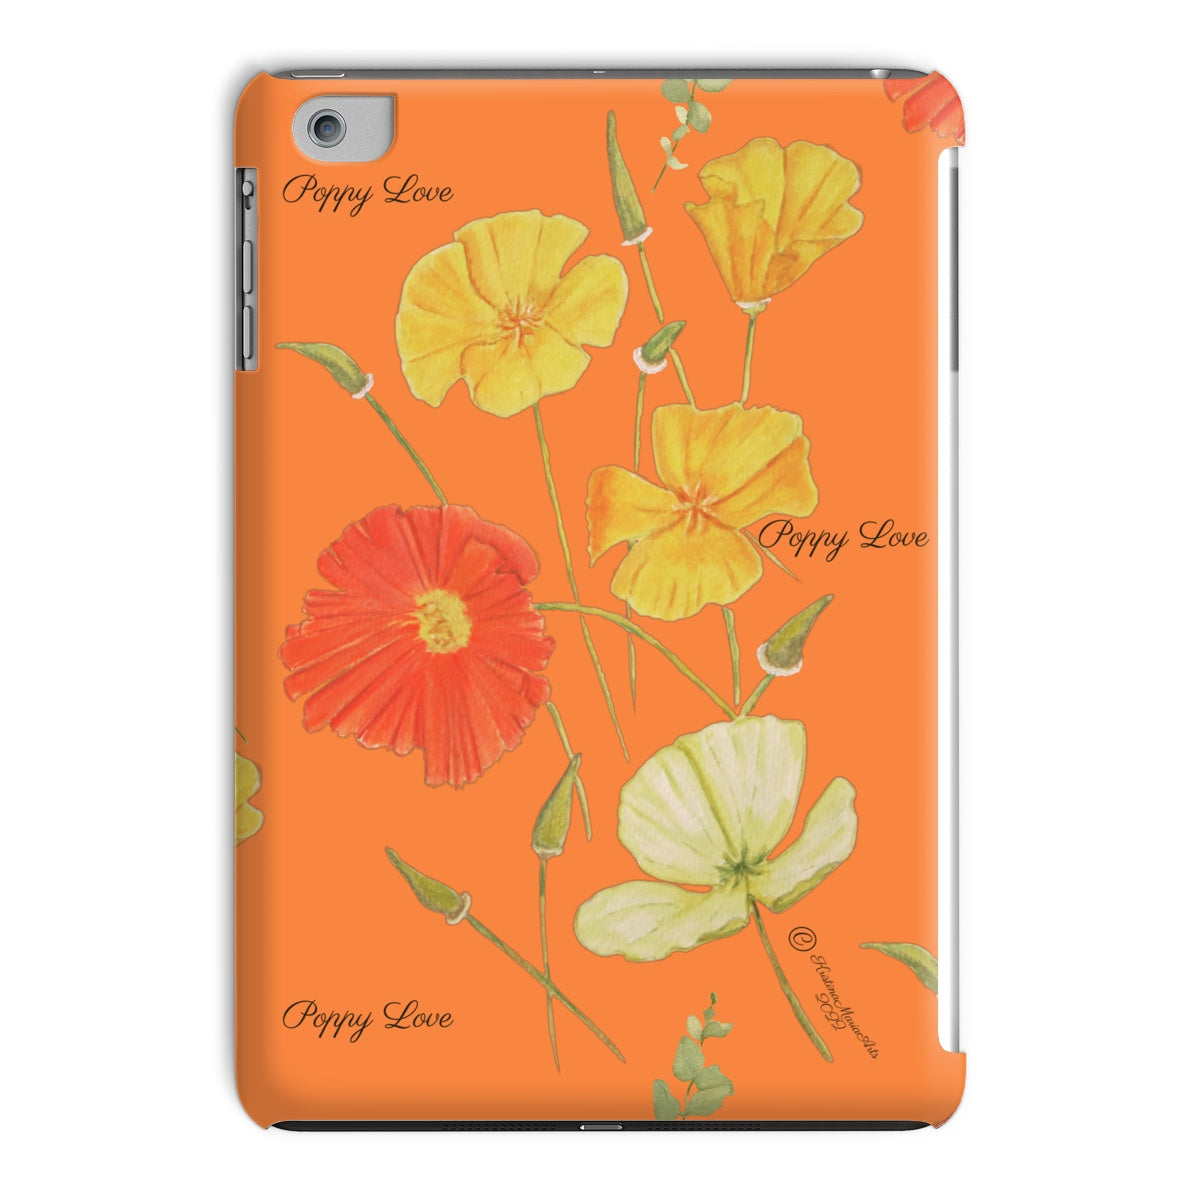 Poppy Love Orange Tablet Cases